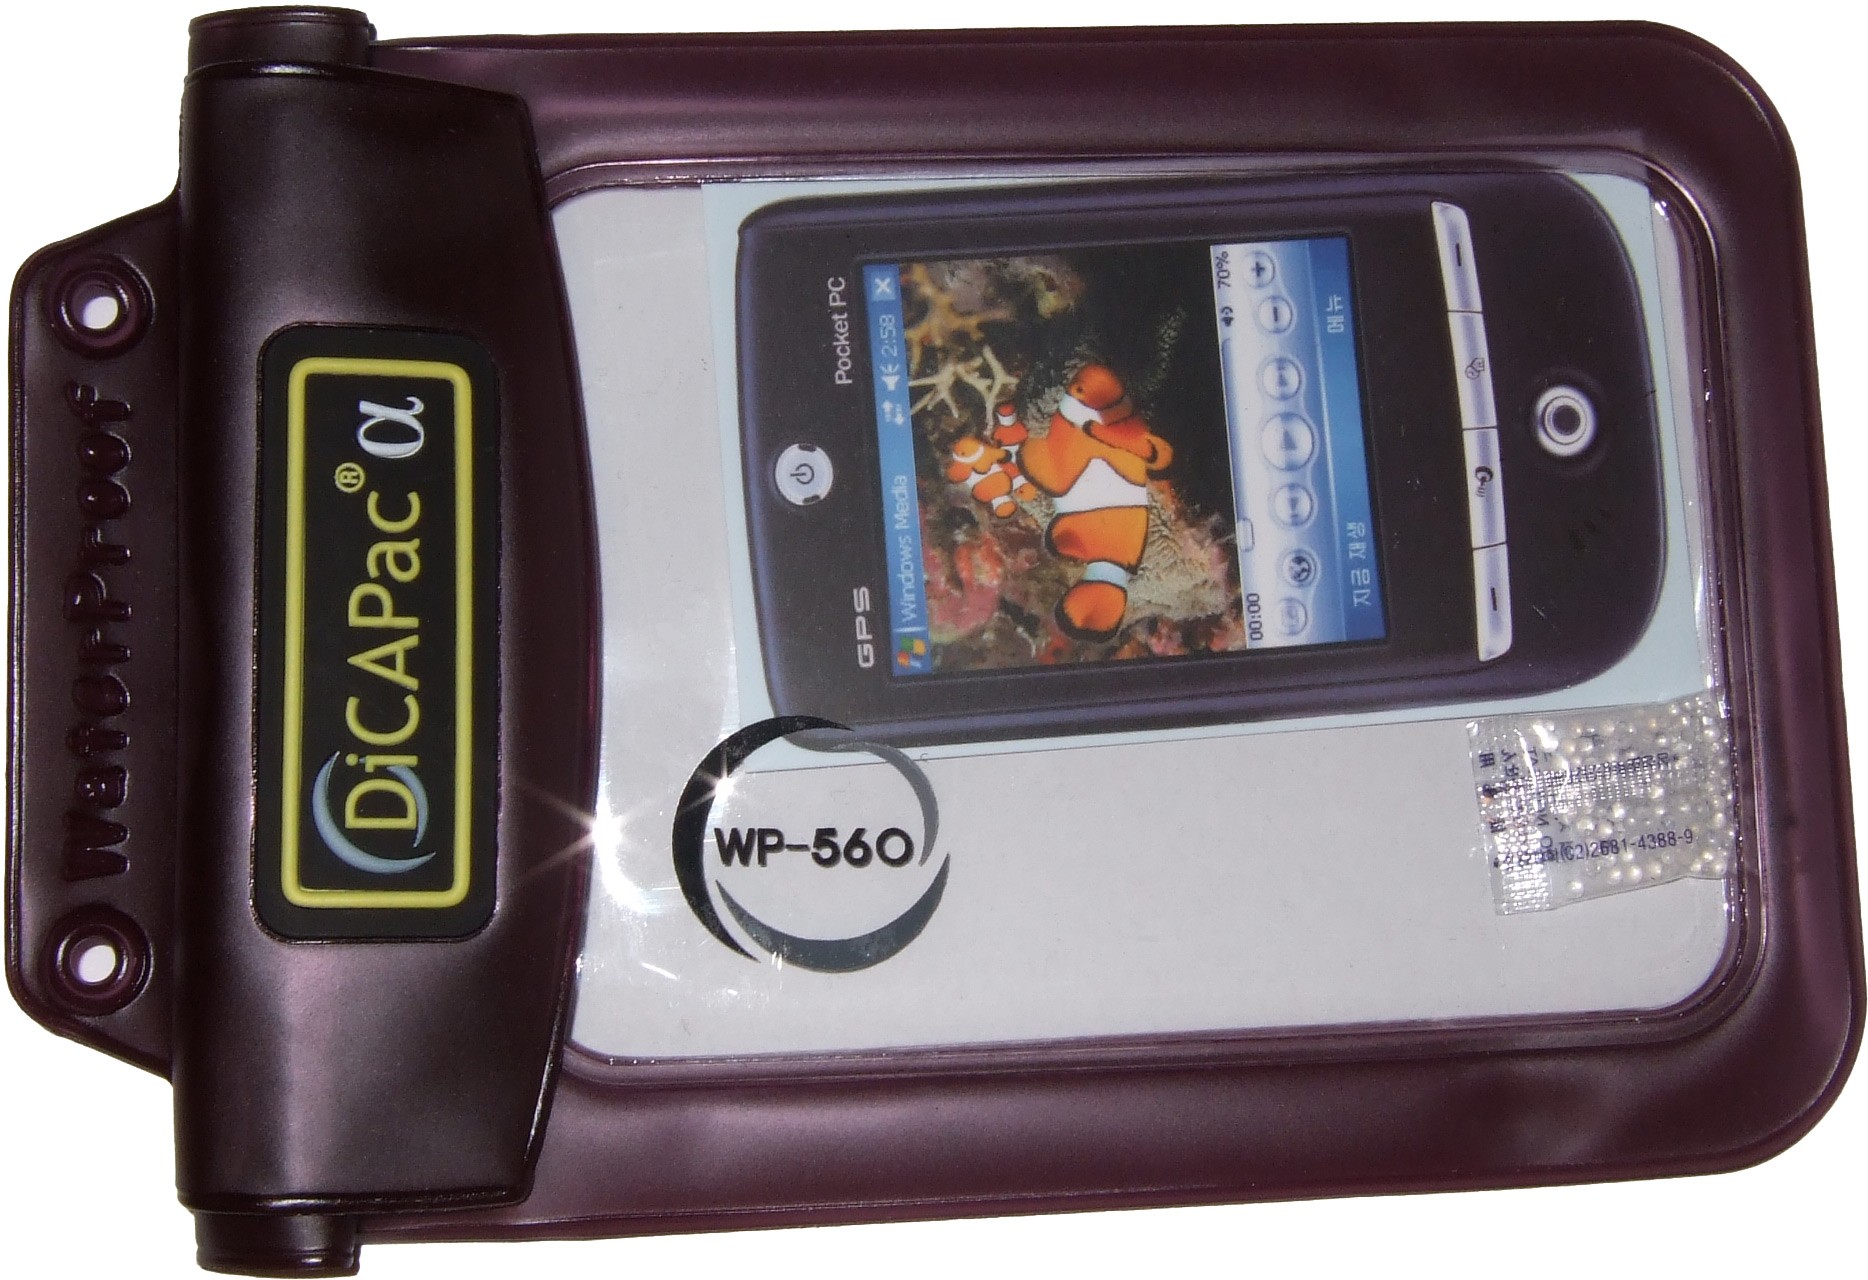 The Universal Waterproof Bag dicapac-wp-560-universal-multipurpose-waterproof-protection-bag-31